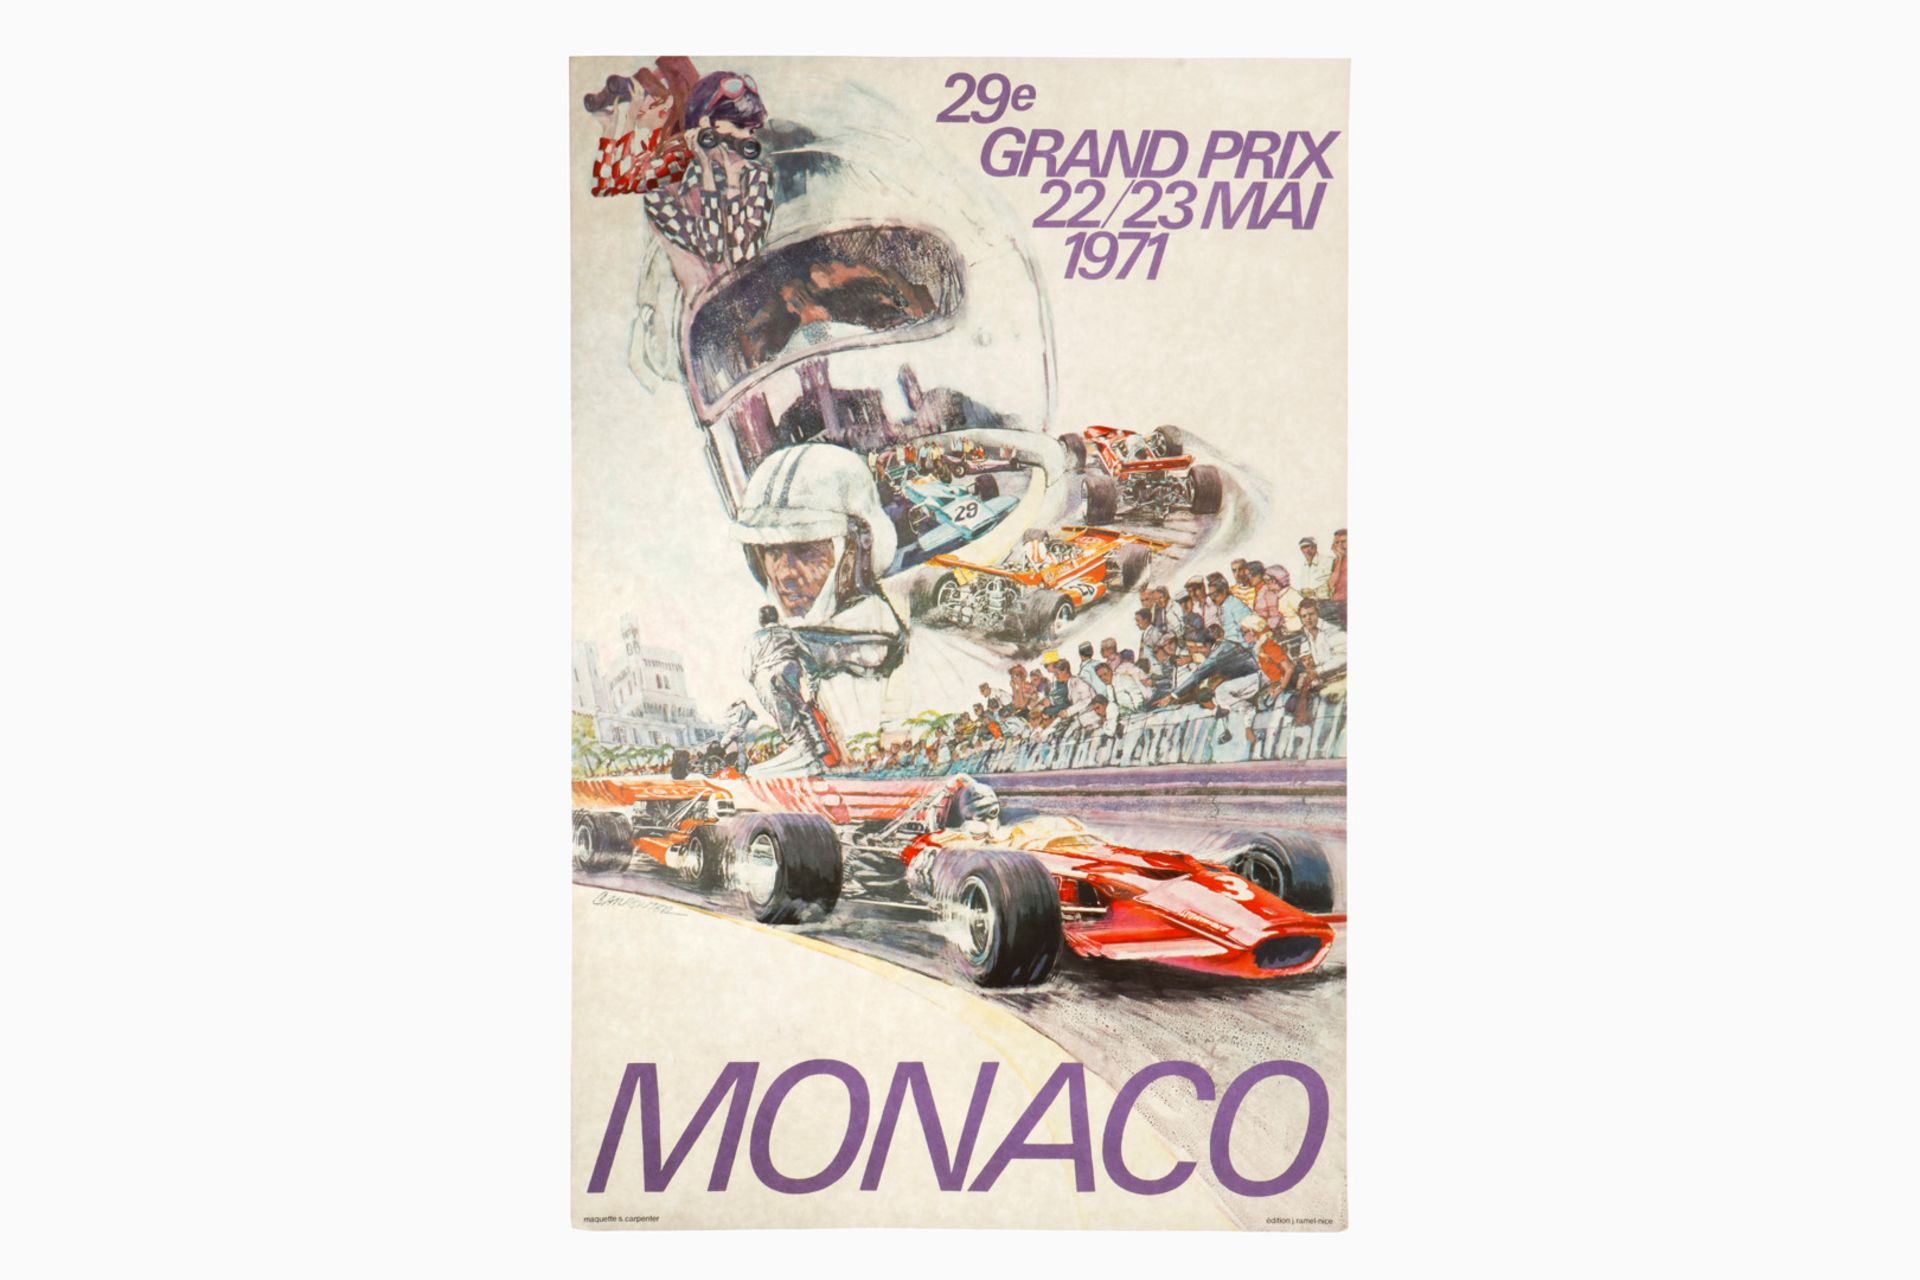 Original Rennplakat 29. Grand Prix 1971 Monaco, Entwurf S. Carpenter, Edition J. Ramel-Nice, 40 x